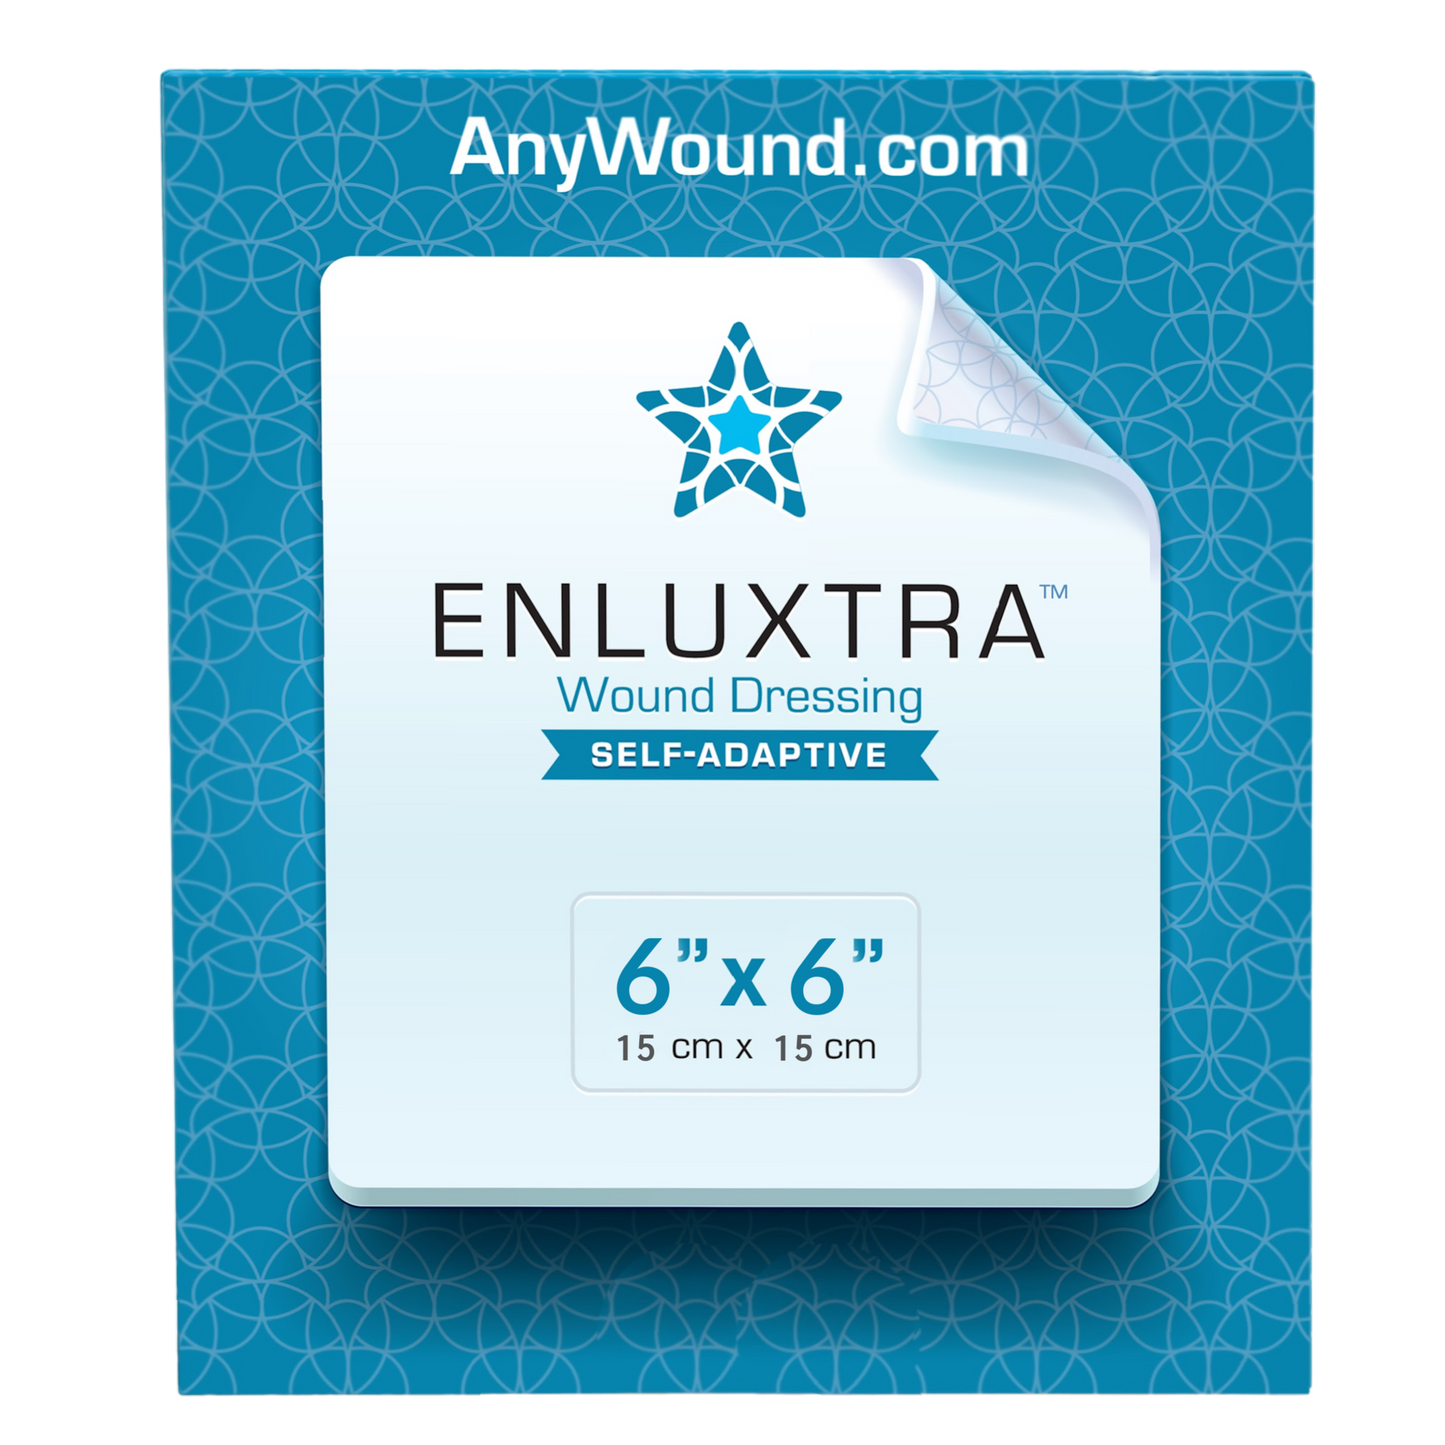 ENLUXTRA 6"x6" Self-Adaptive Wound Dressing (Box of 5)